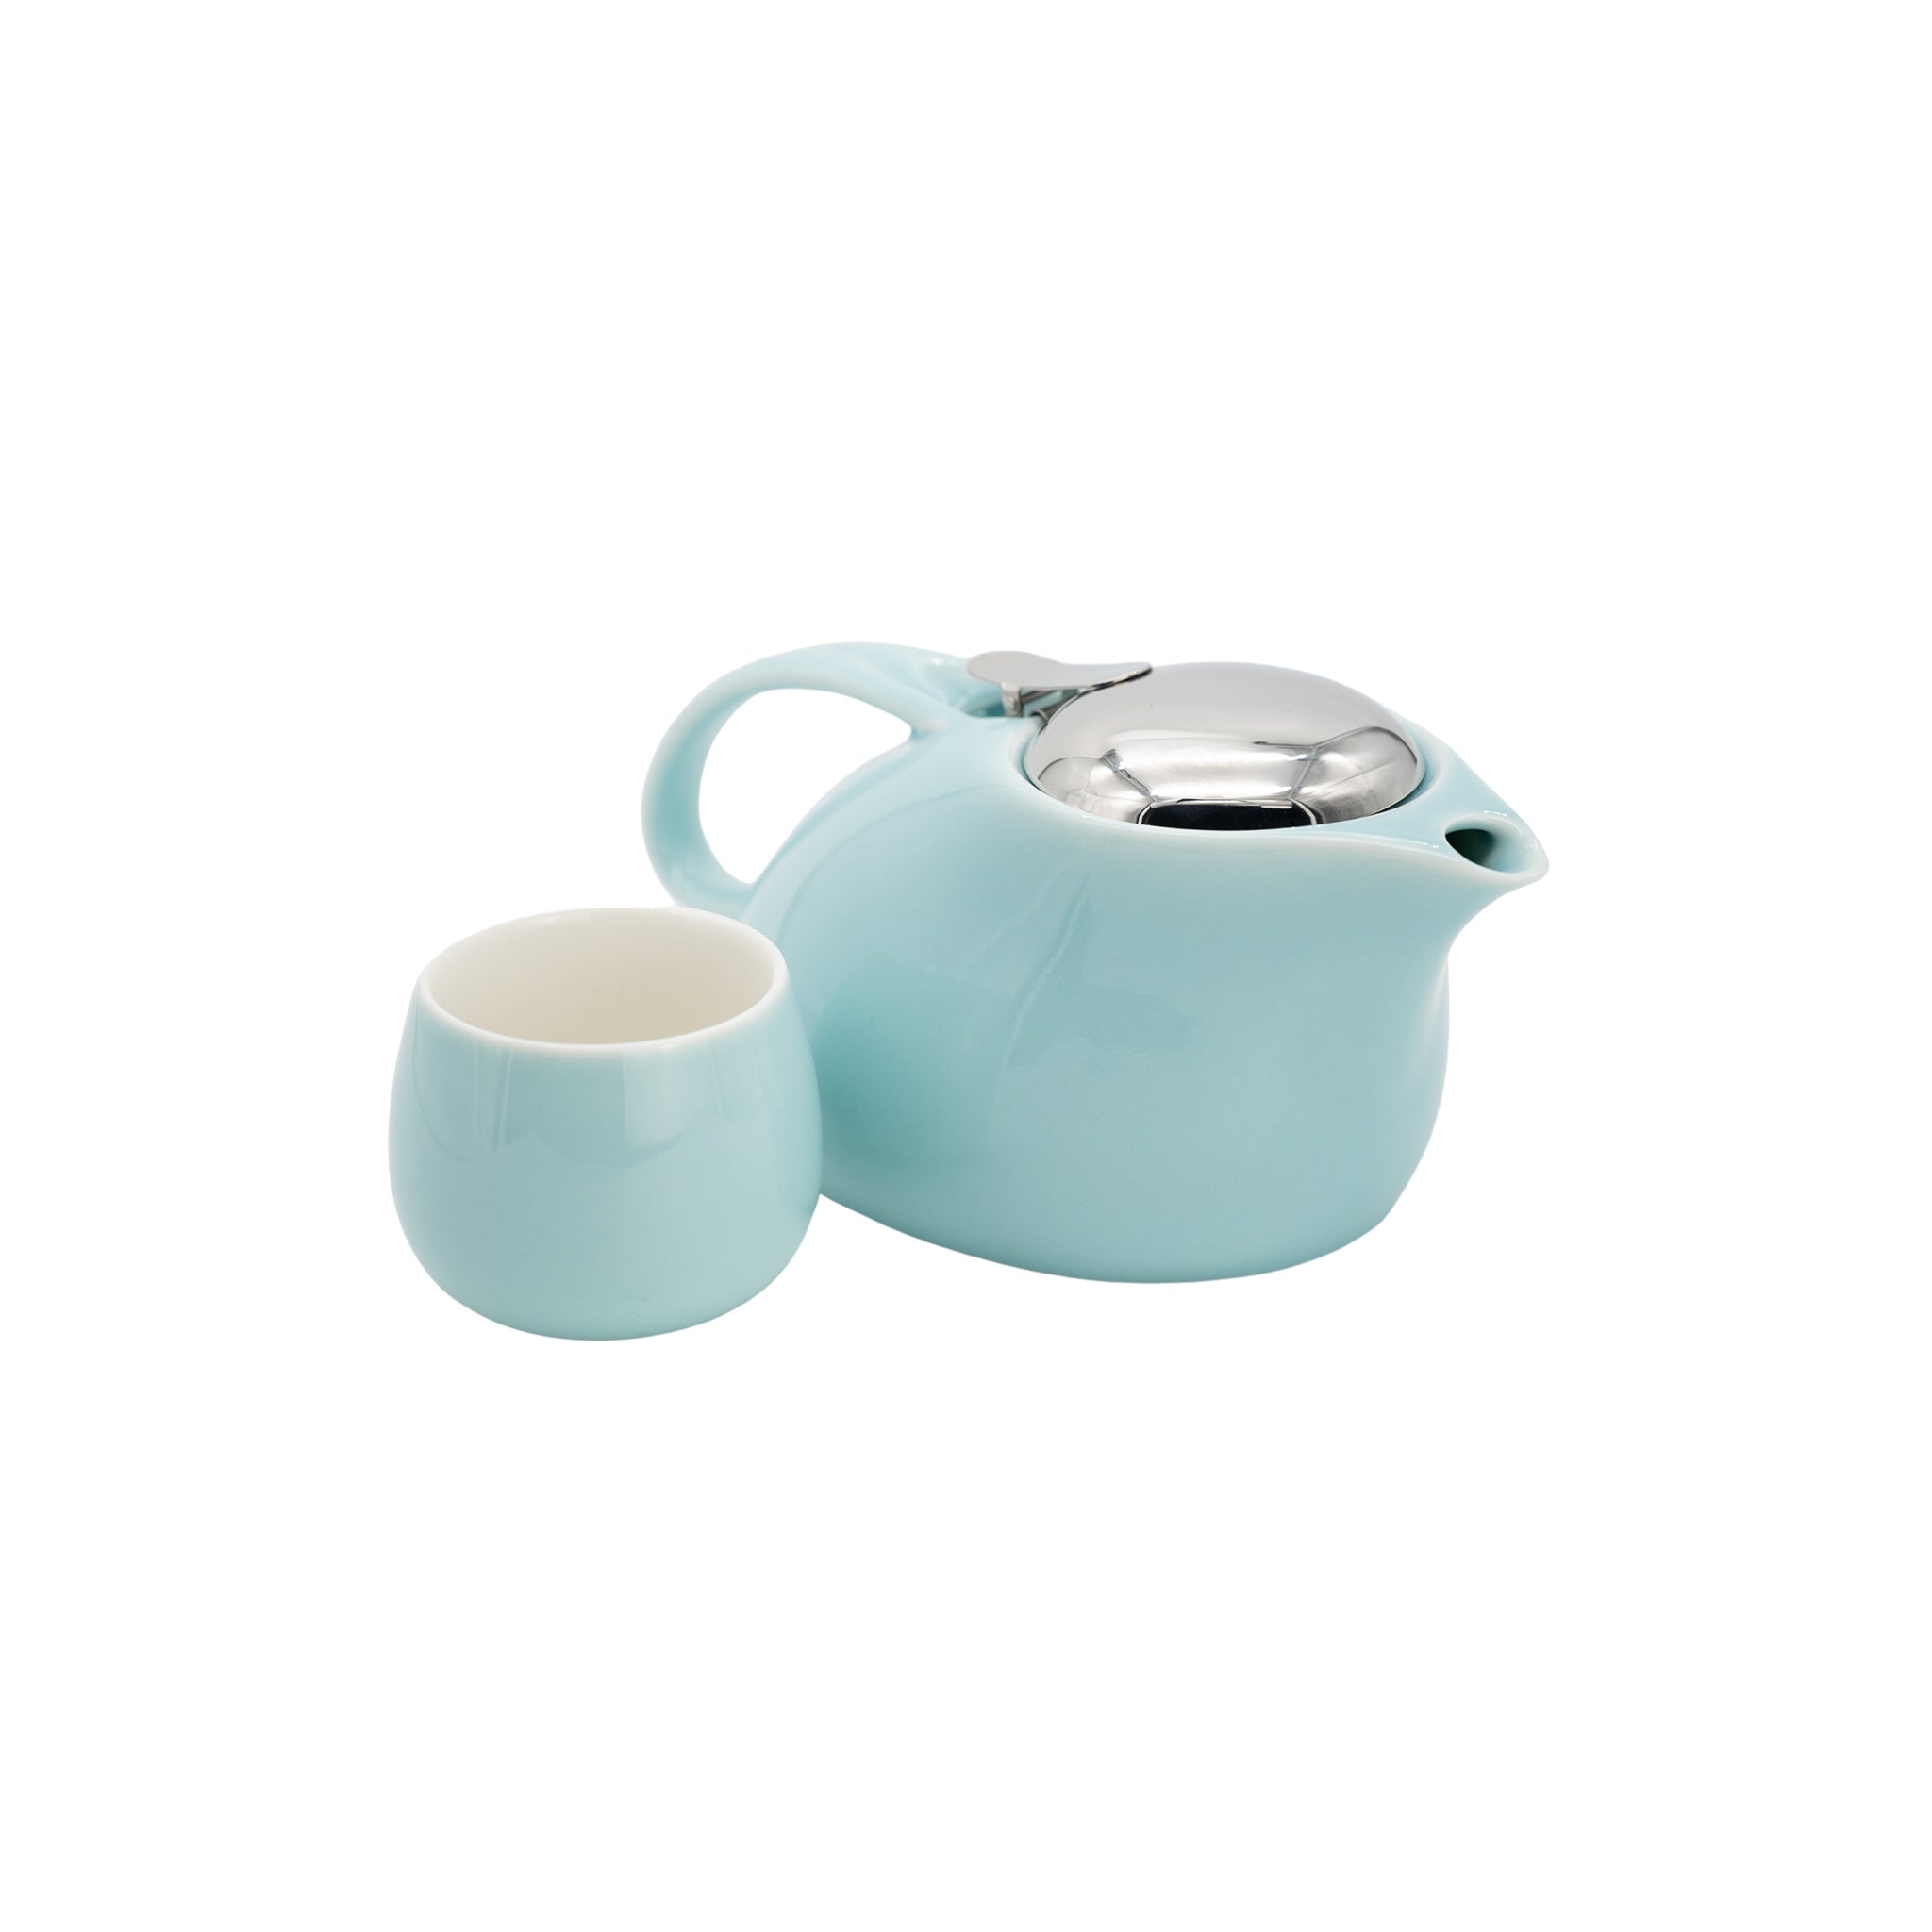 Tea Pot Set (Blue) with Organic Jasmine Extra Special Green Tea